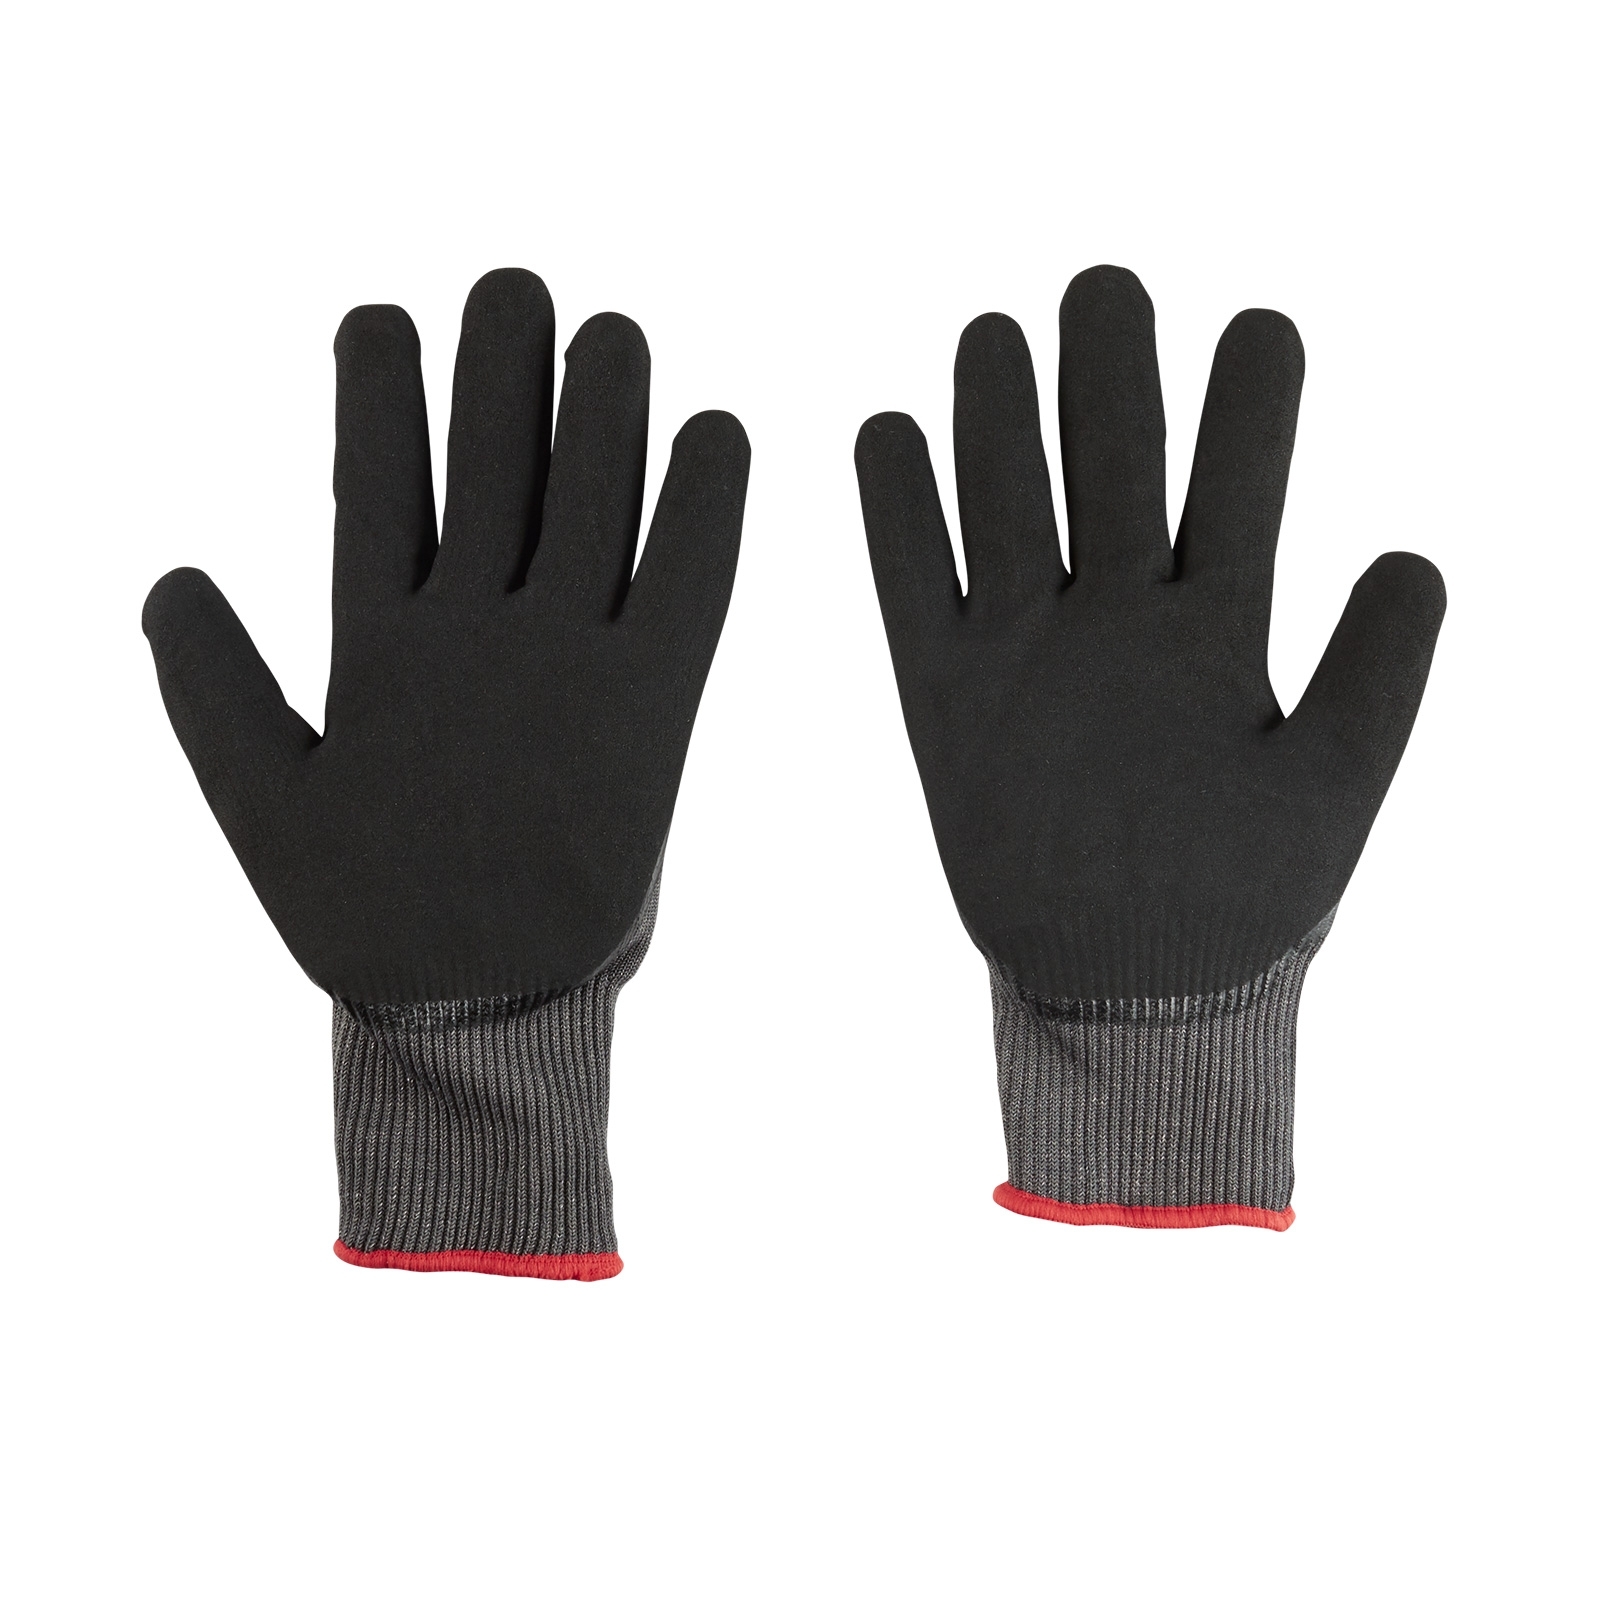 Milwaukee Cut Level 5 Gloves - Small 48228950